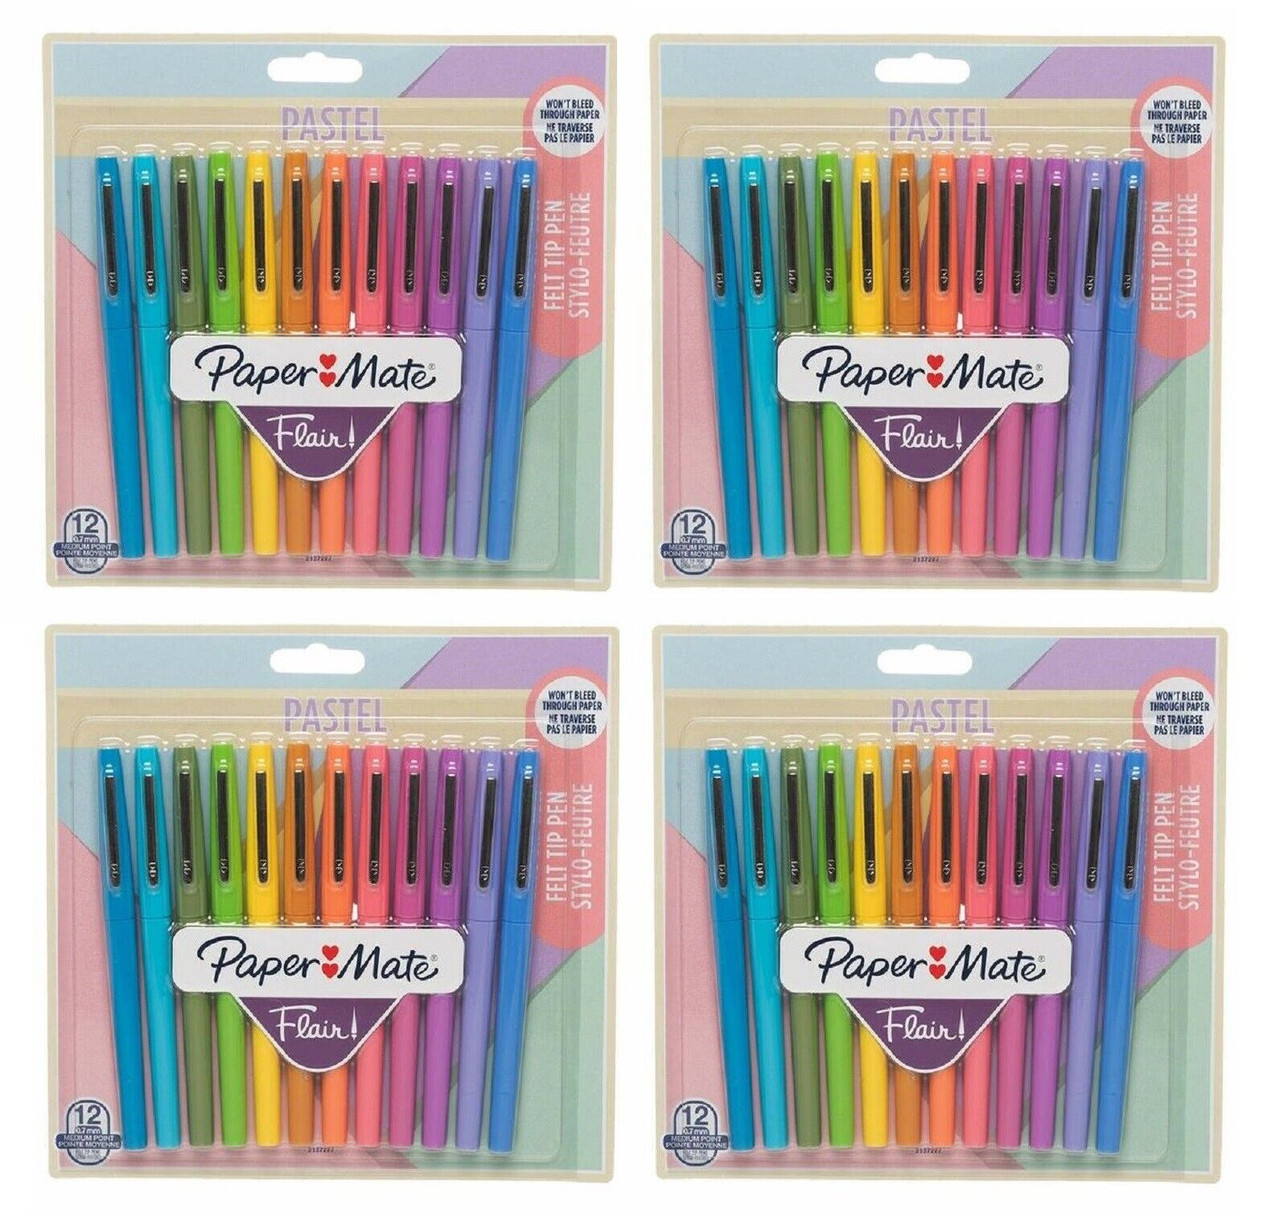 PaperMate Flair Felt Tip Pens 0.7mm Tip Pastel 48 Pack - Big White